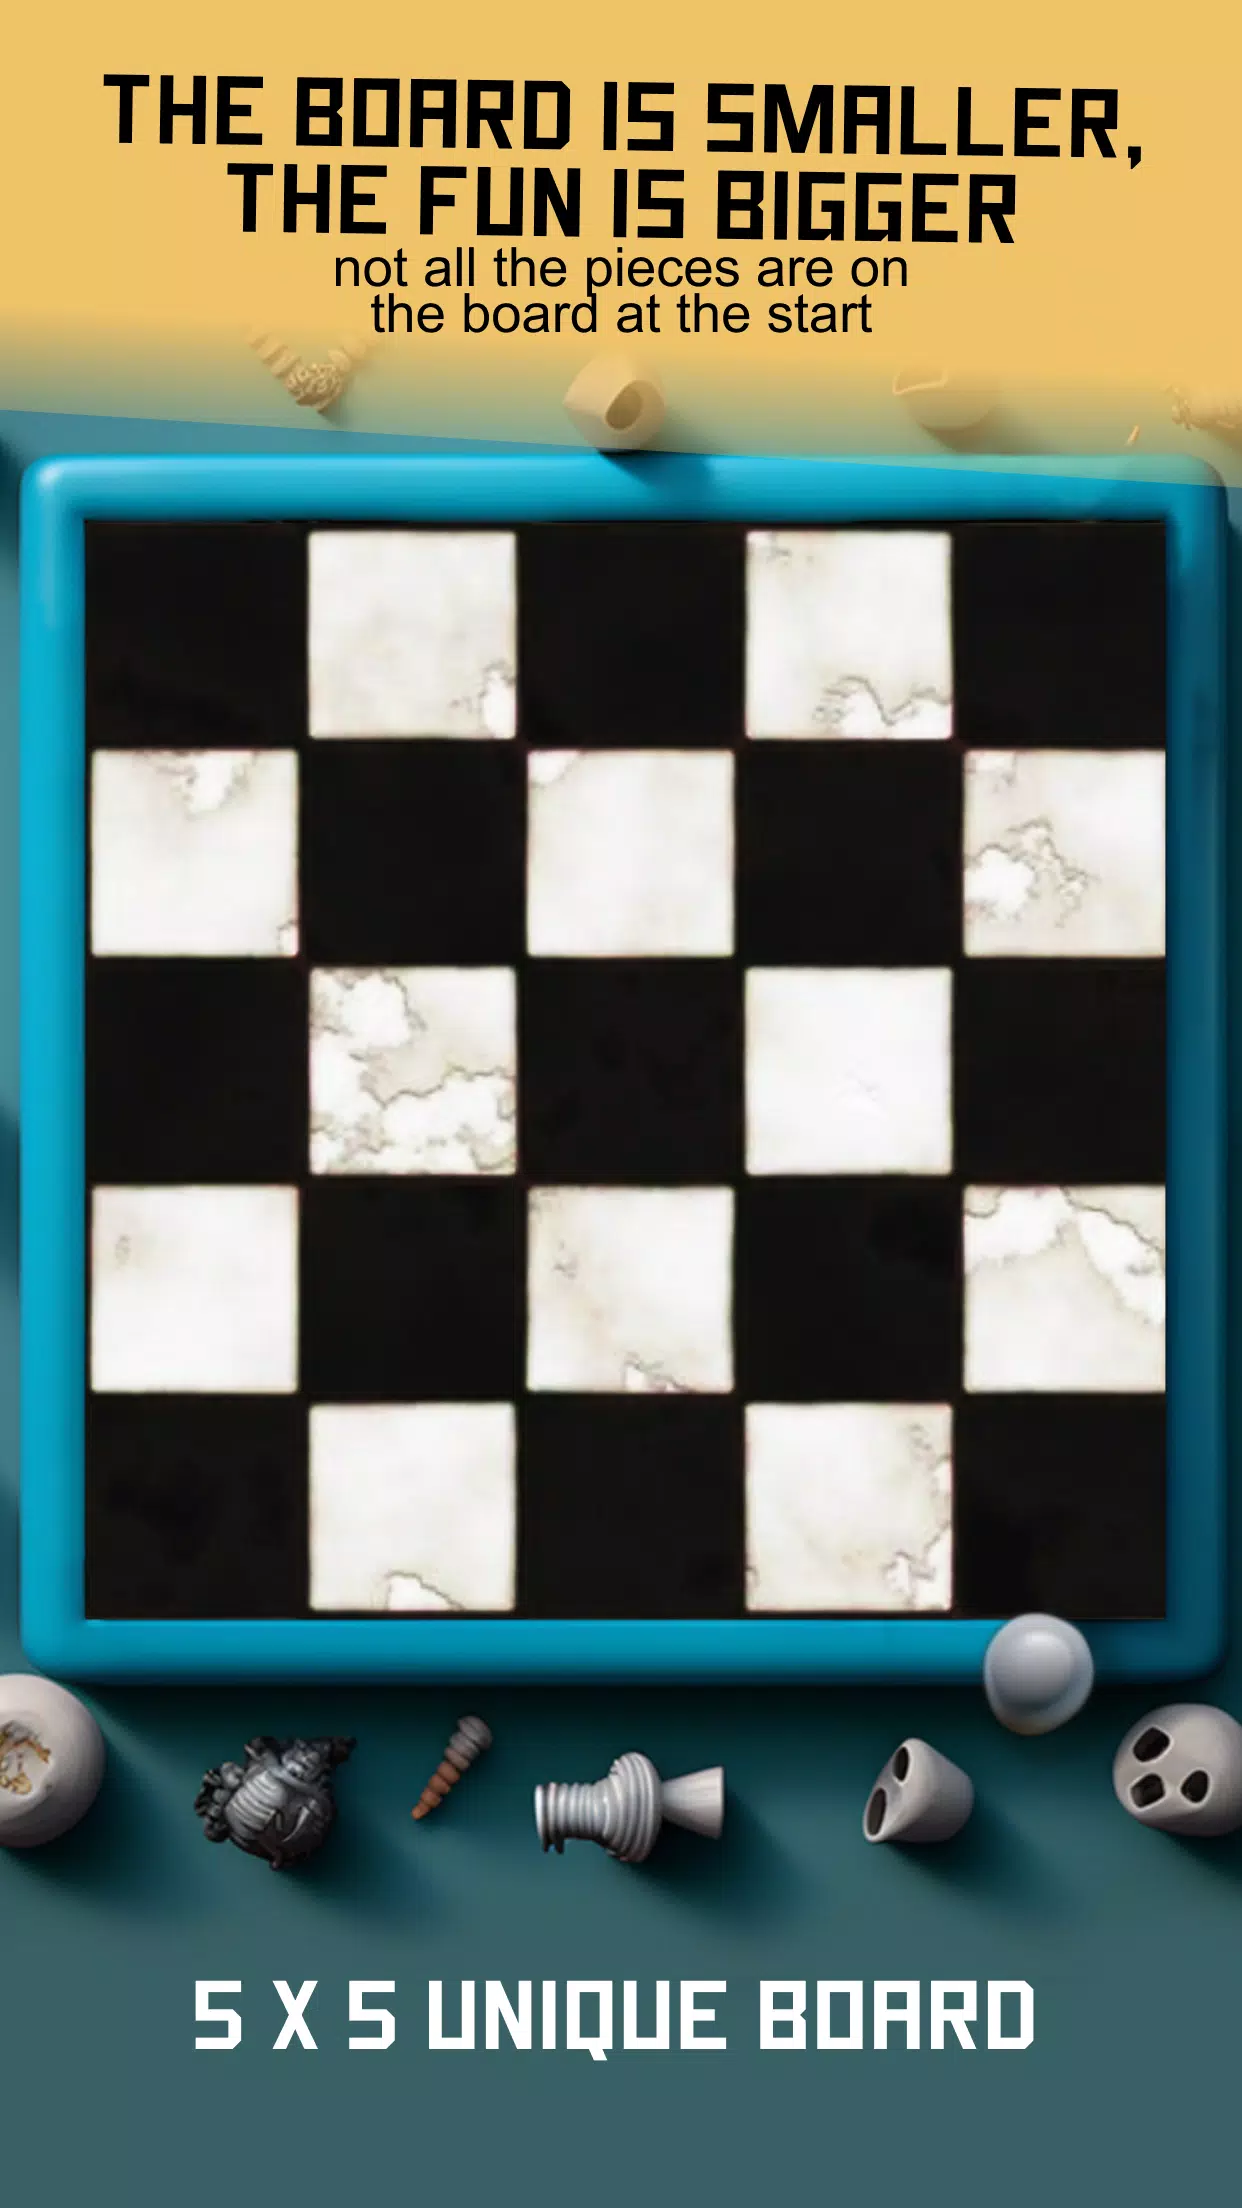 RedHotPawn Chess (@RedHotPawn) / X